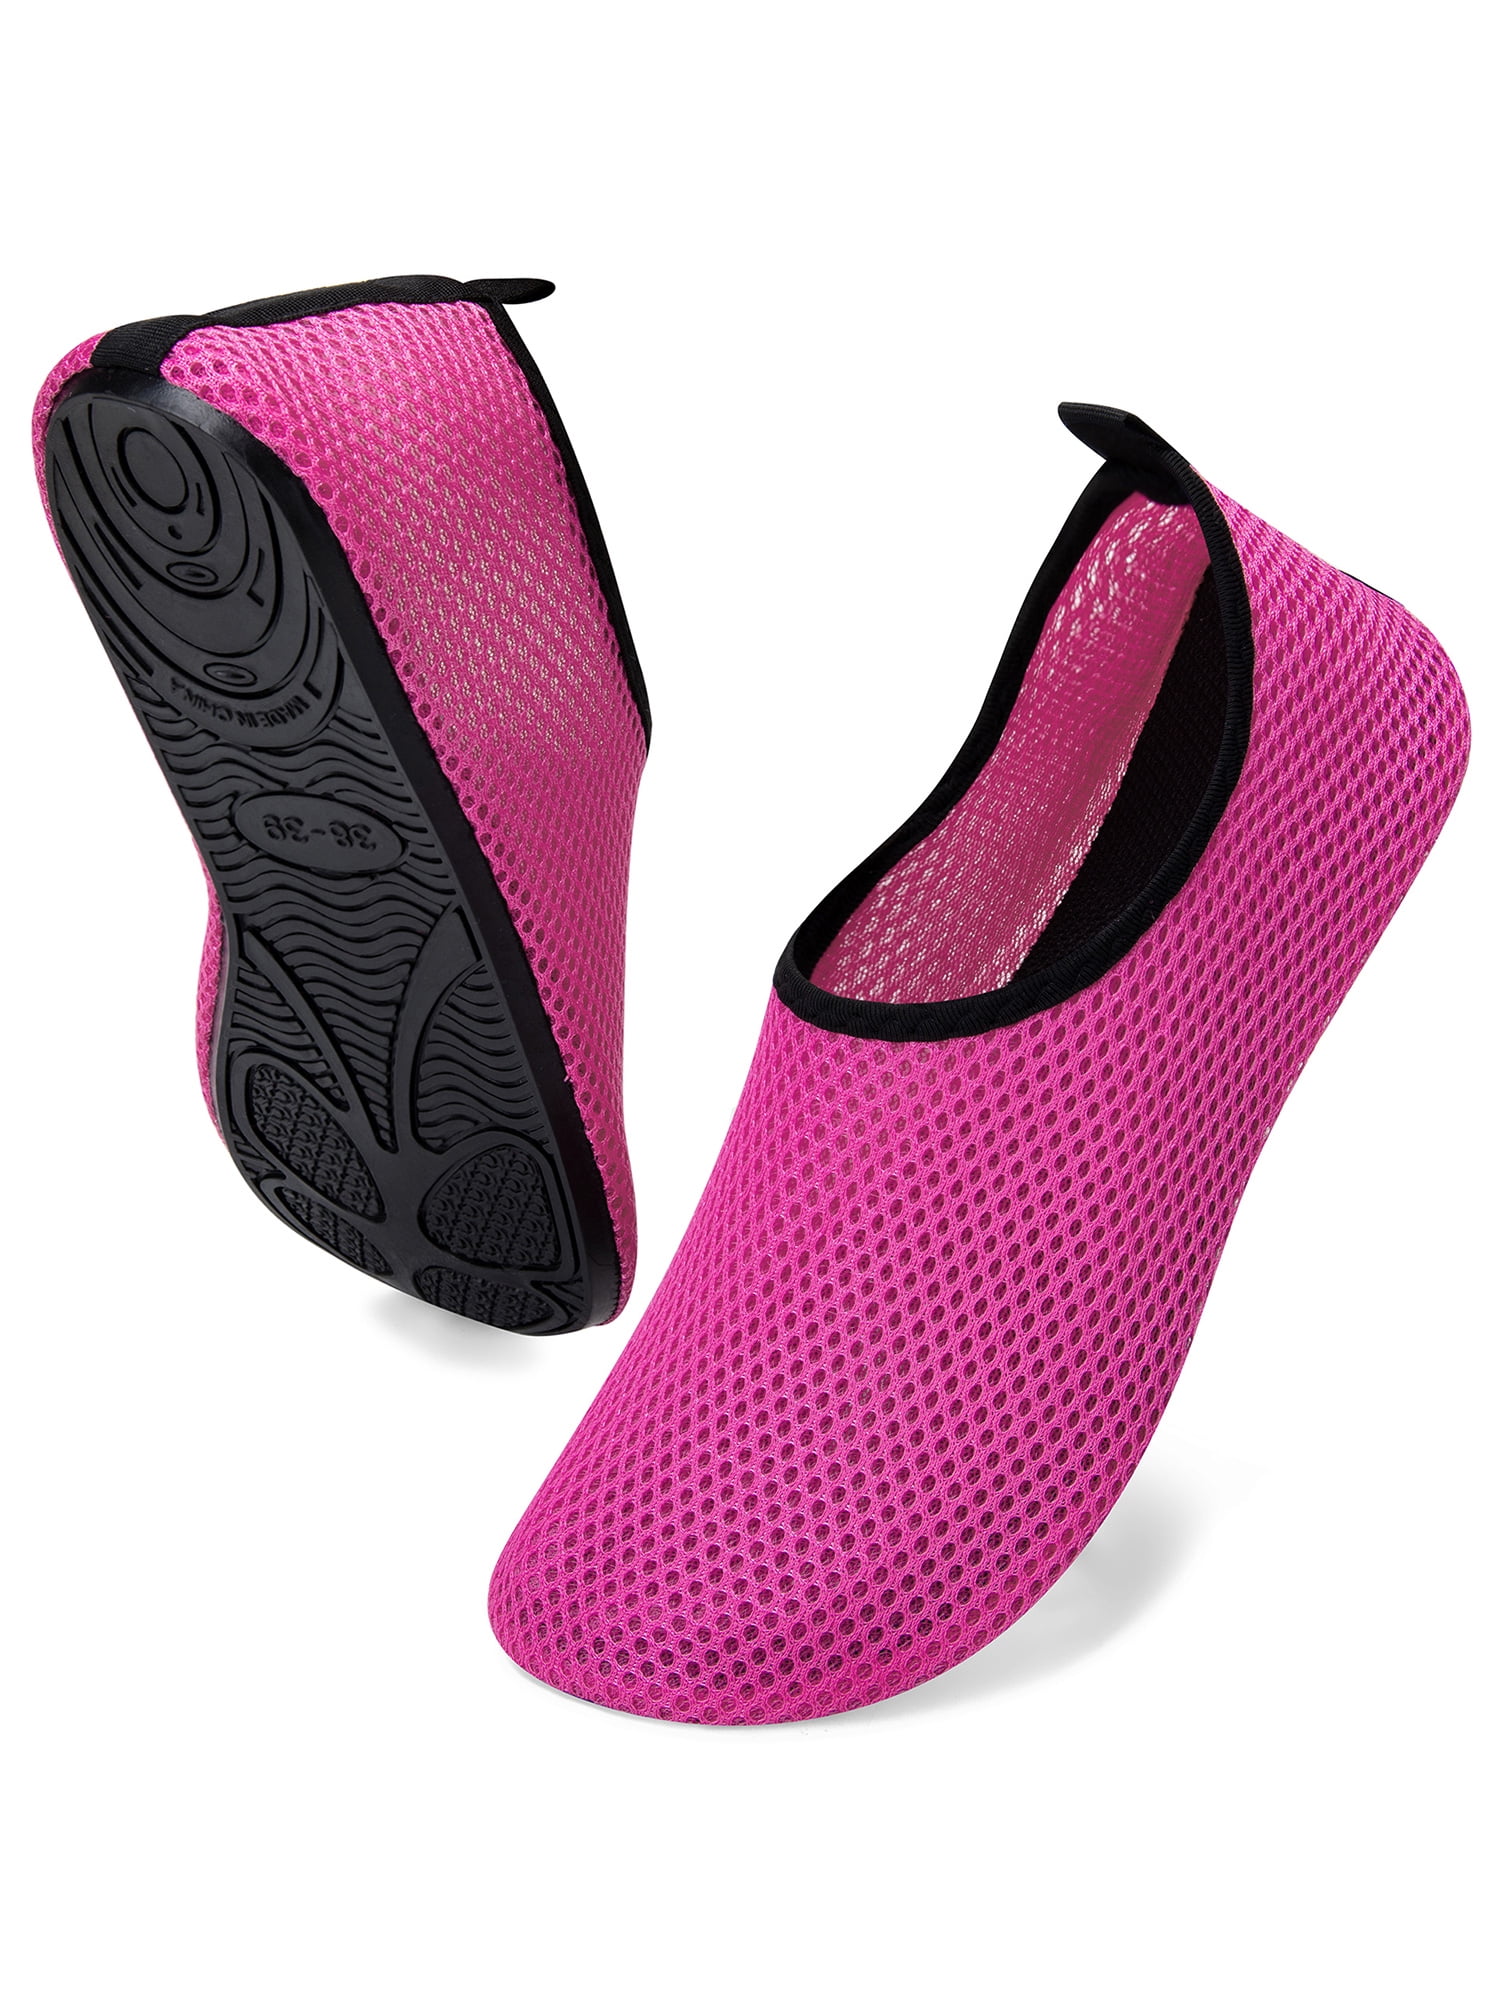 Womens Water Shoes Ultralight Mesh Slip On Quick Drying Aqua Beach Pool Exercise 